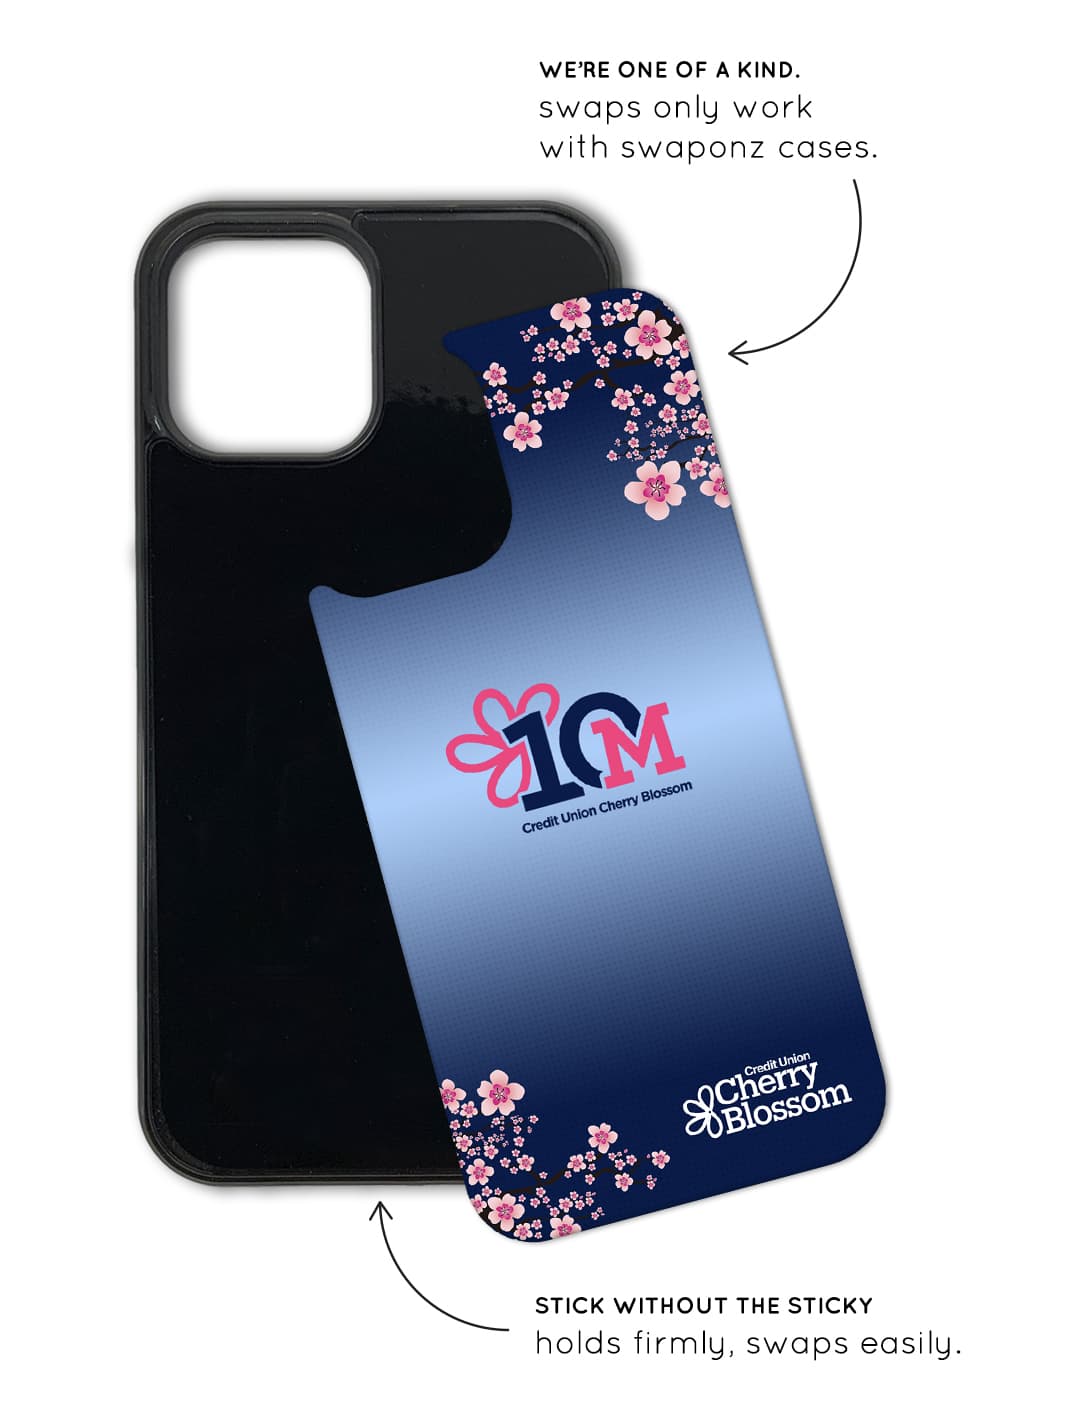 Phone Case Set - Credit Union Cherry Blossom 10M